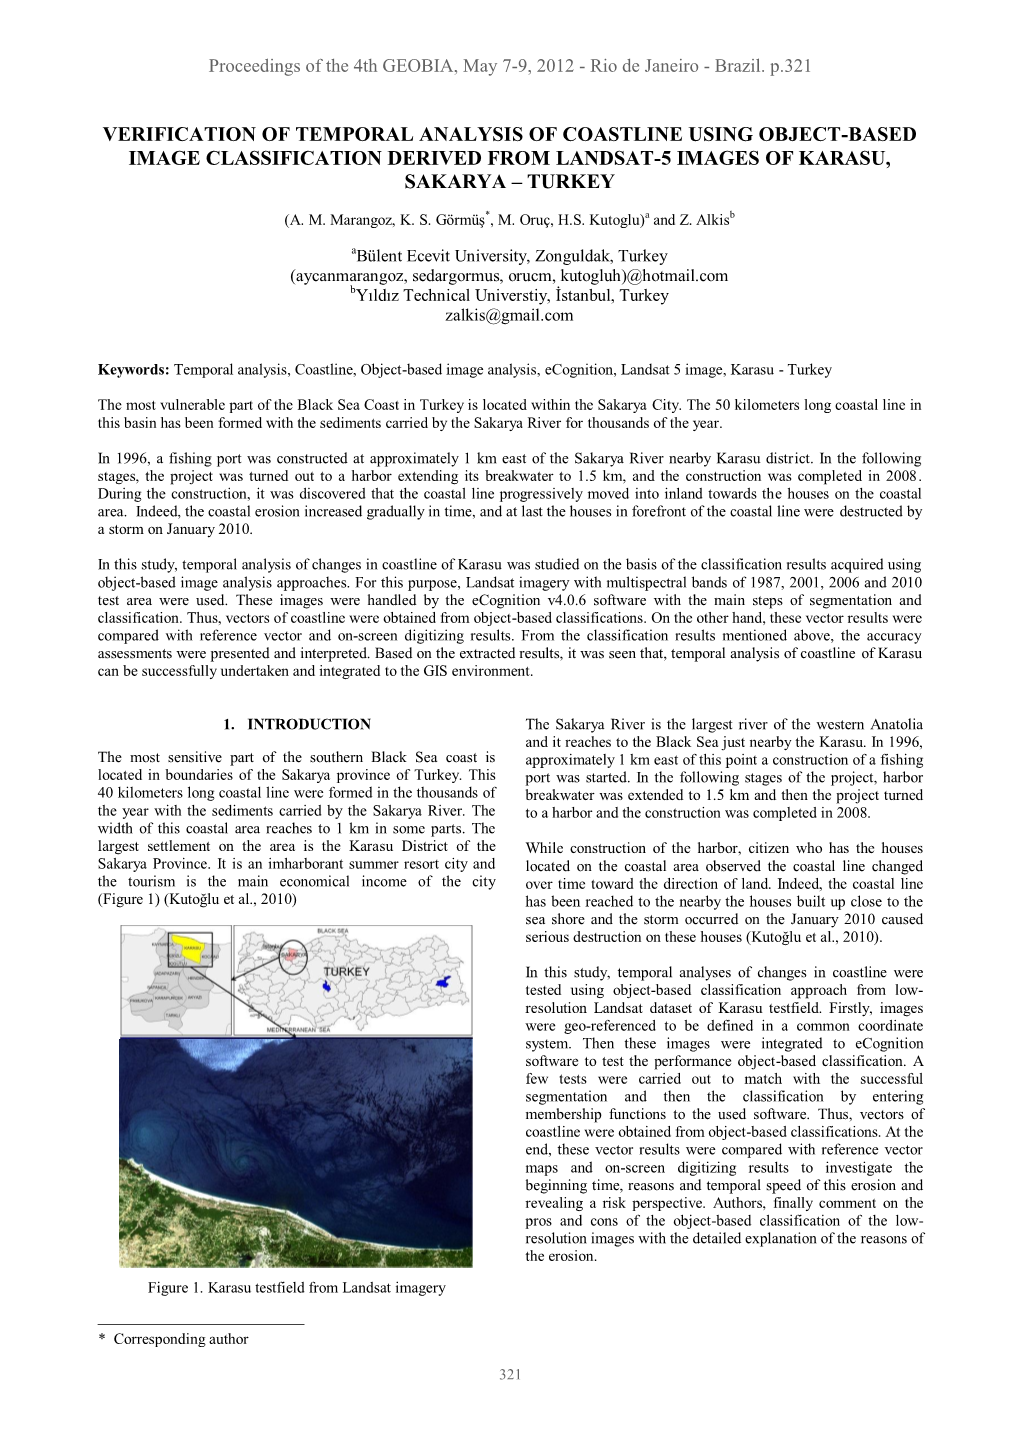 Verification of Temporal Analysis of Coastline Using Object-Based Image Classification Derived from Landsat-5 Images of Karasu, Sakarya – Turkey